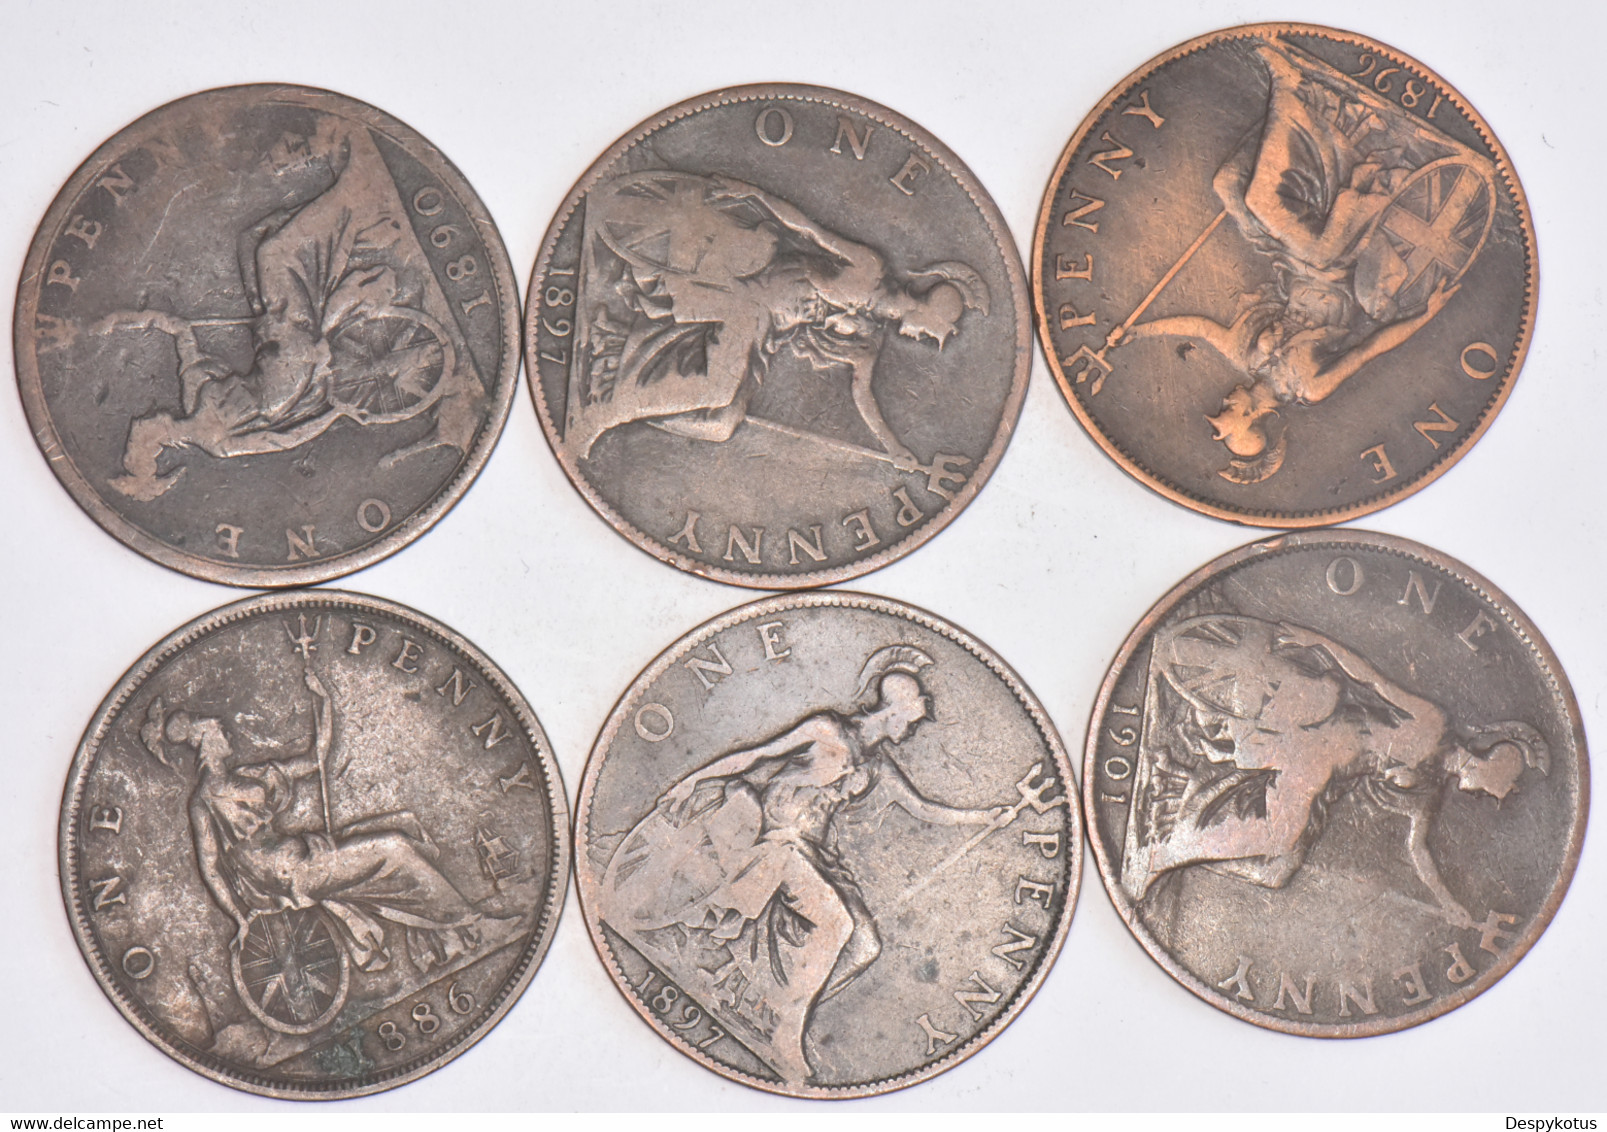 Grande-Bretagne - Lot De 6 Pence Reine Victoria - 1886-1901 - 05-079L2 - D. 1 Penny